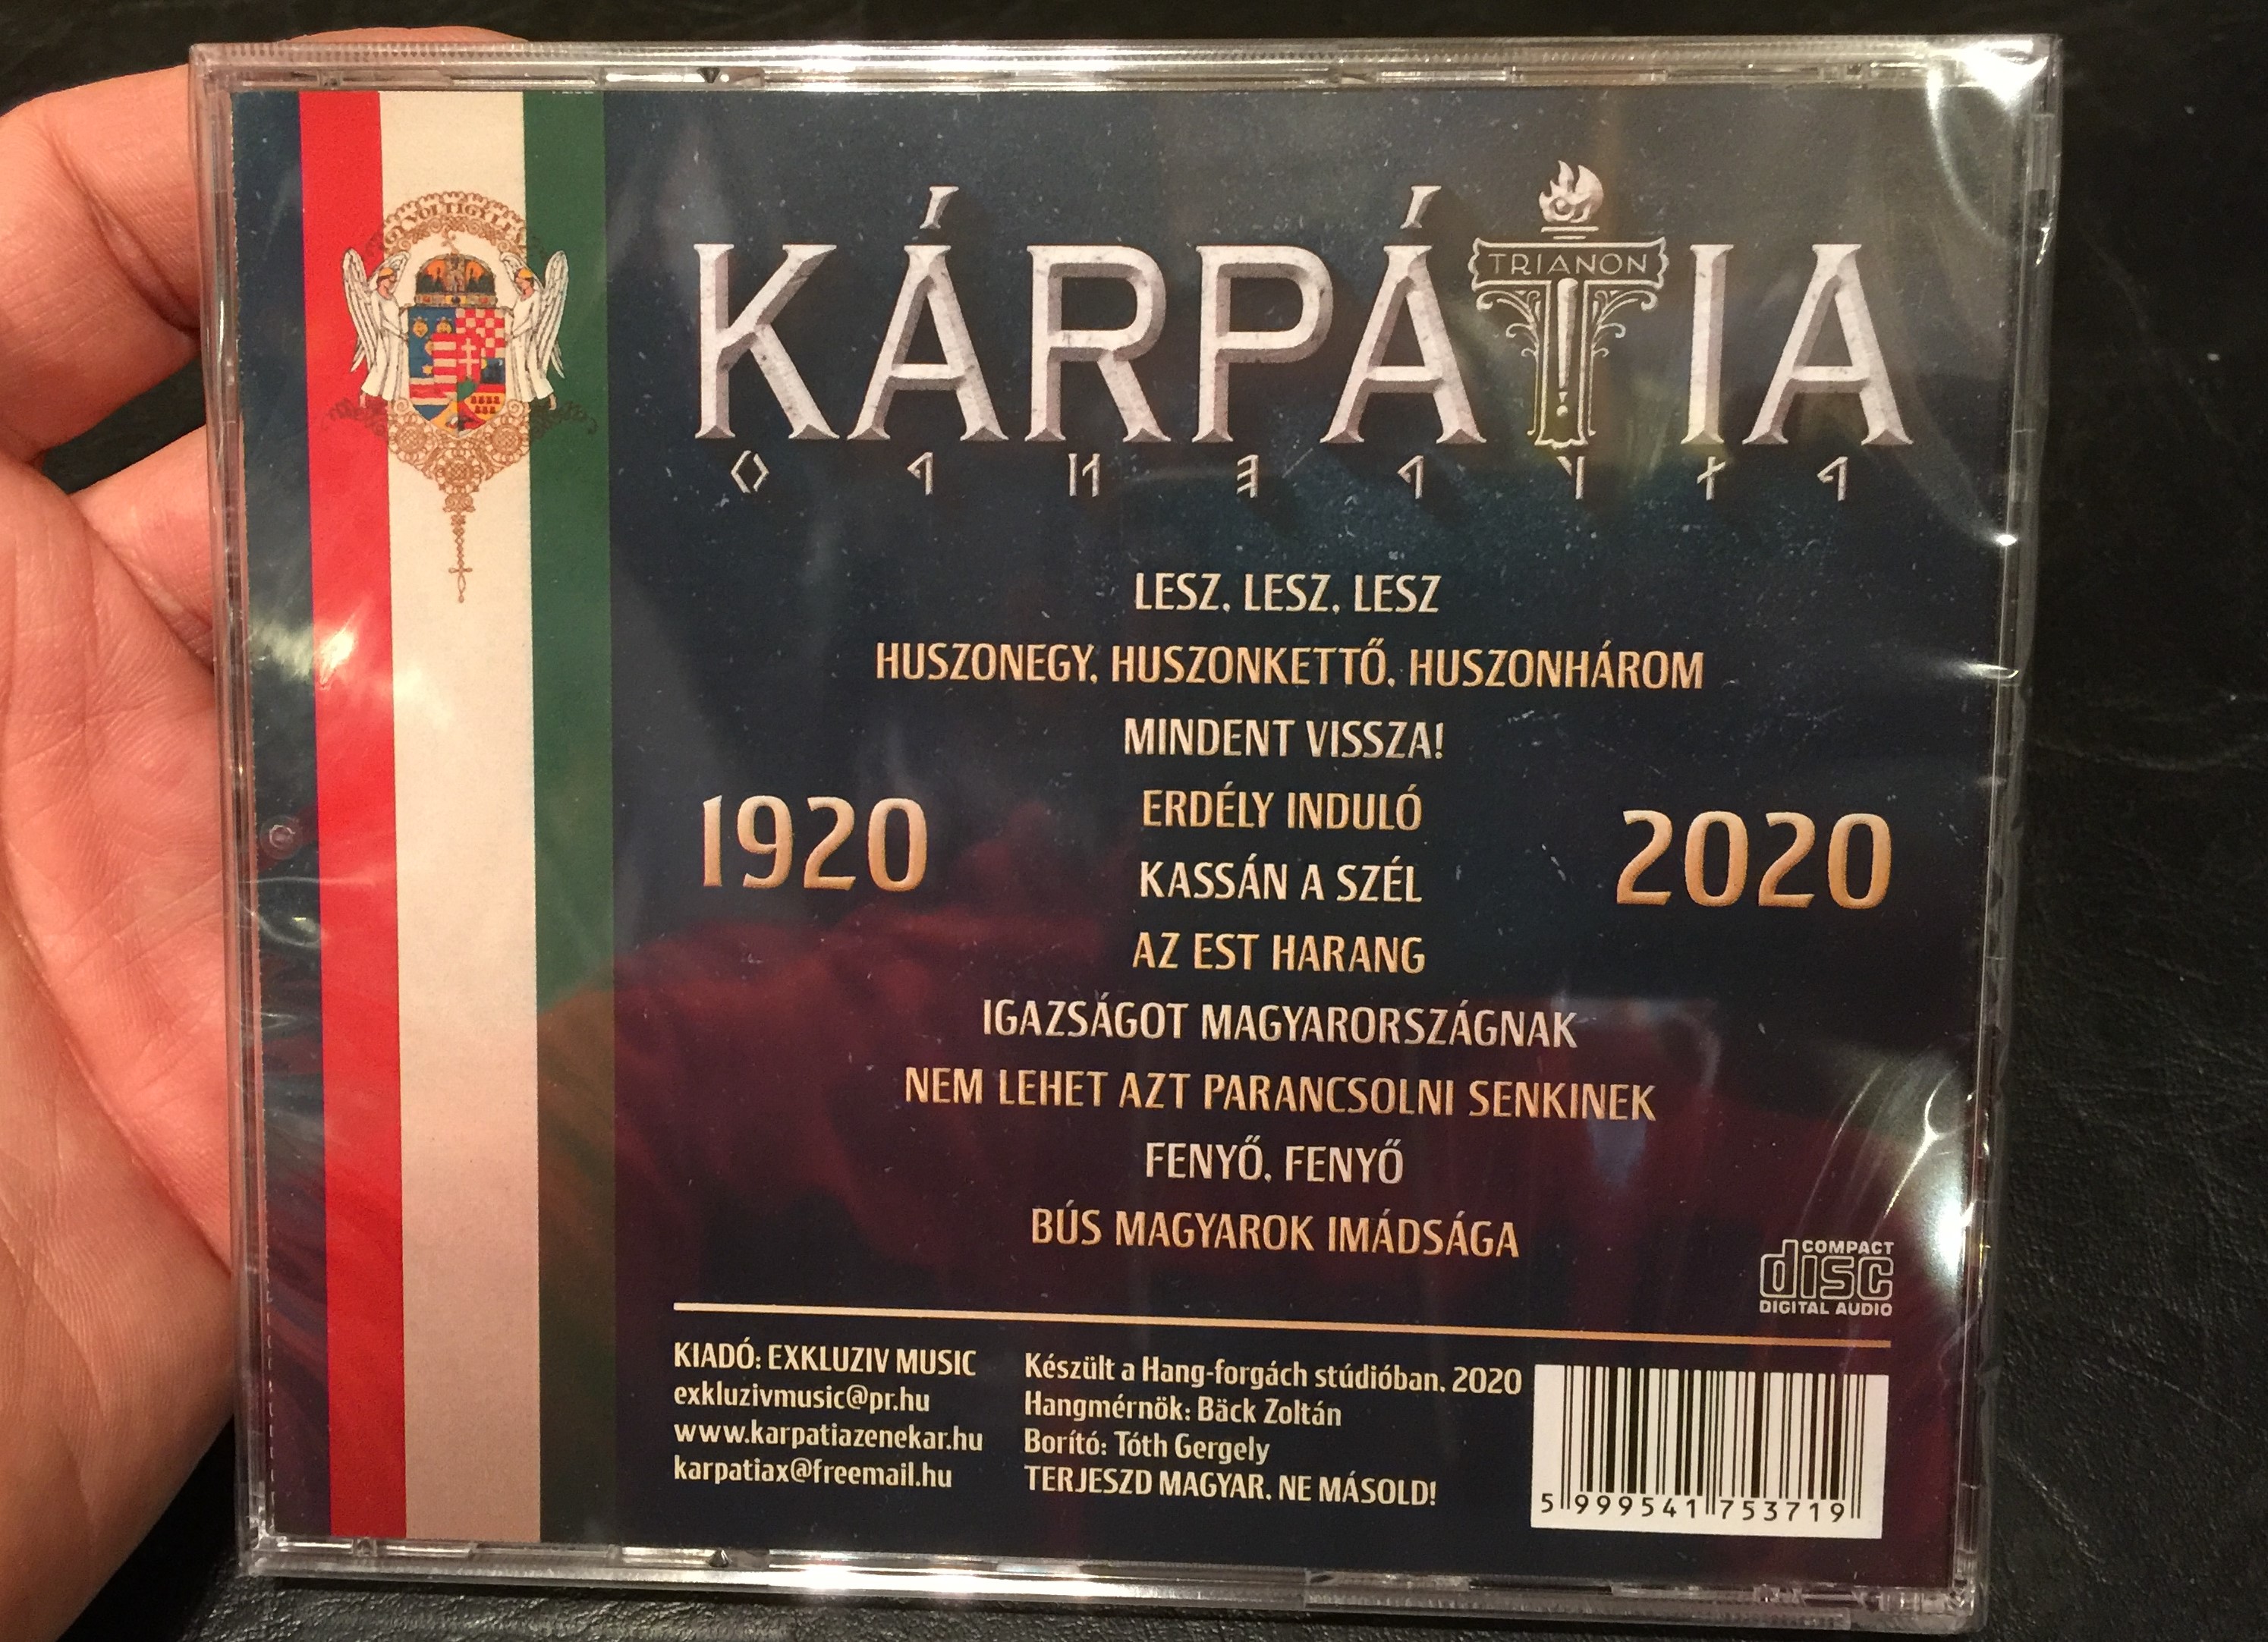 k-rp-tia-trianon-1920-exkluziv-music-kiad-audio-cd-2020-emk-068-2-.jpg